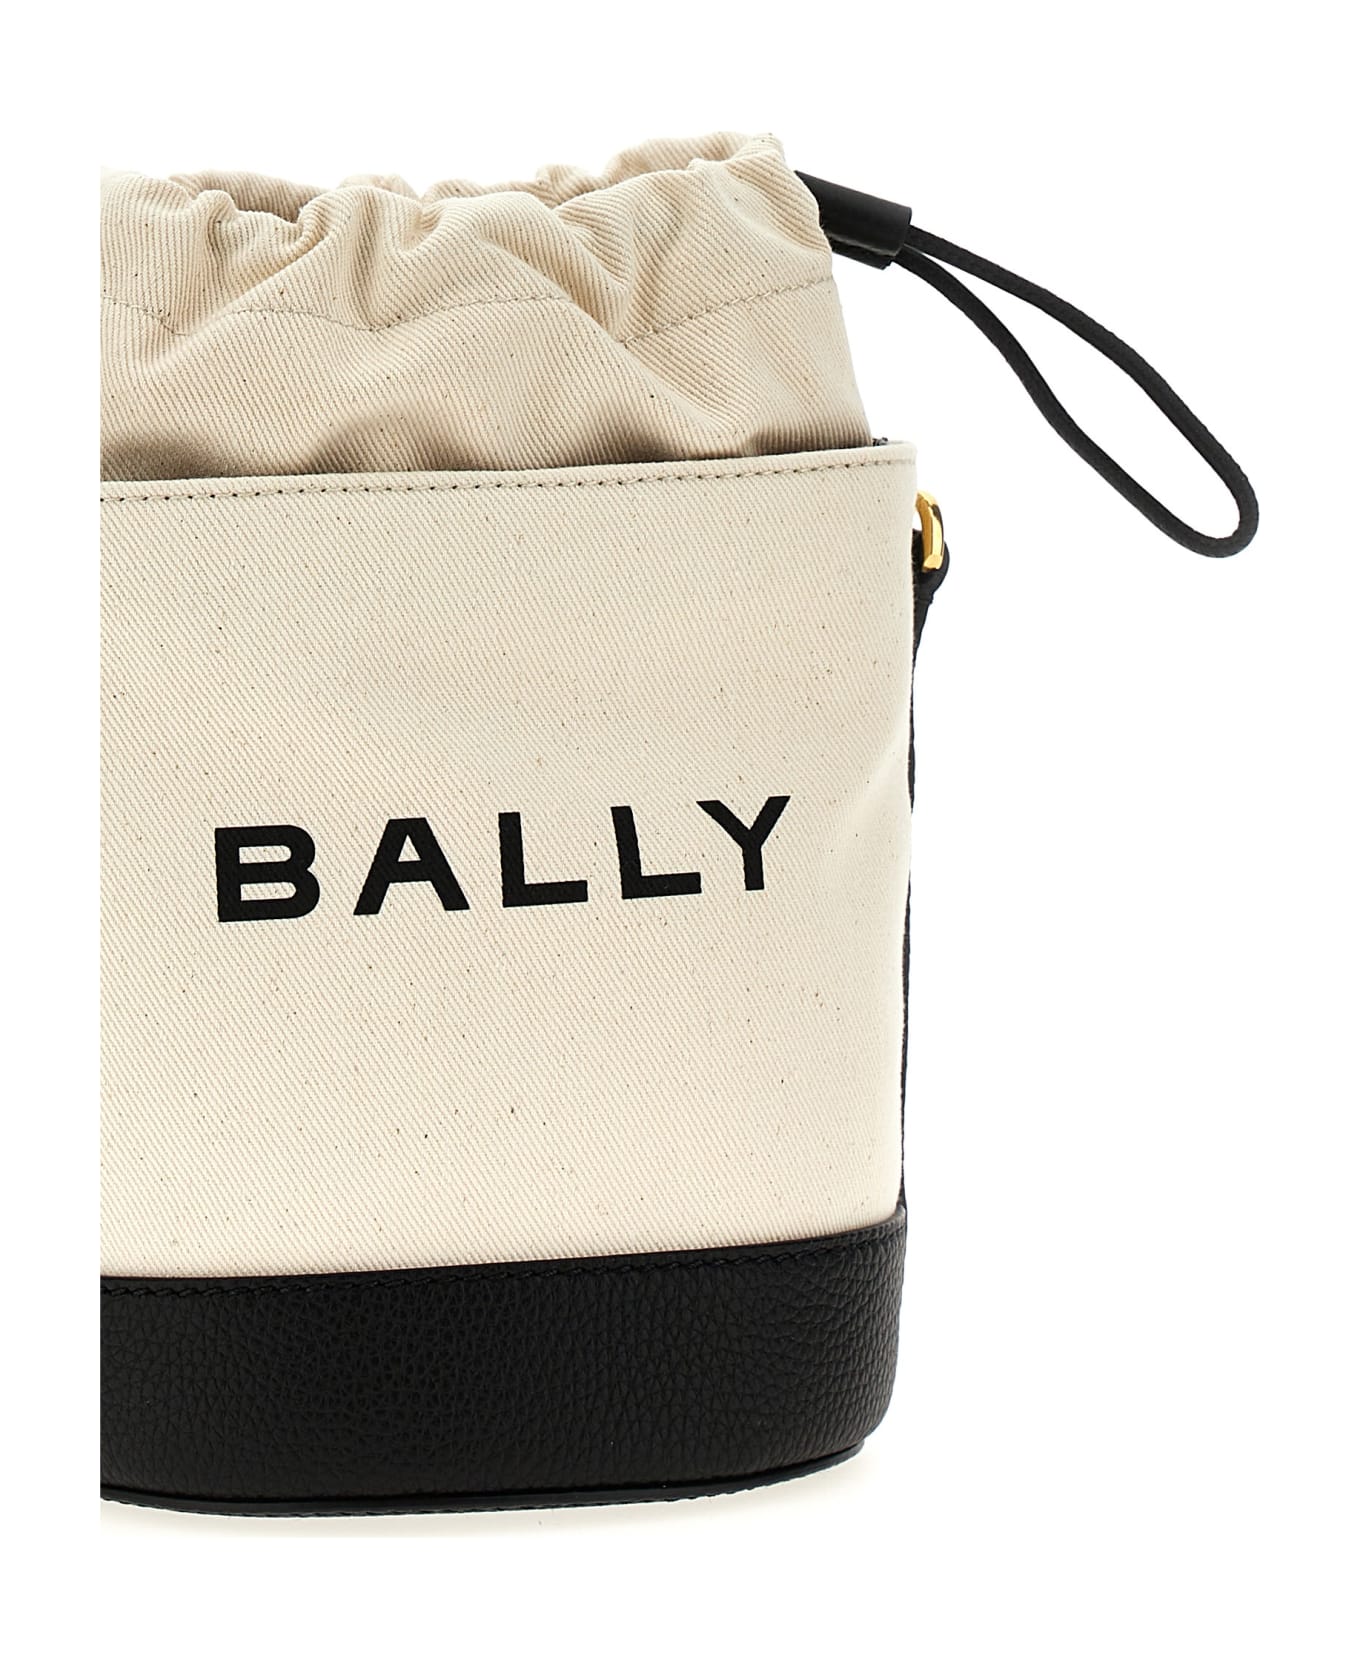 Bally 'bar Mini 8 Hours' Shopping Bag - White/Black